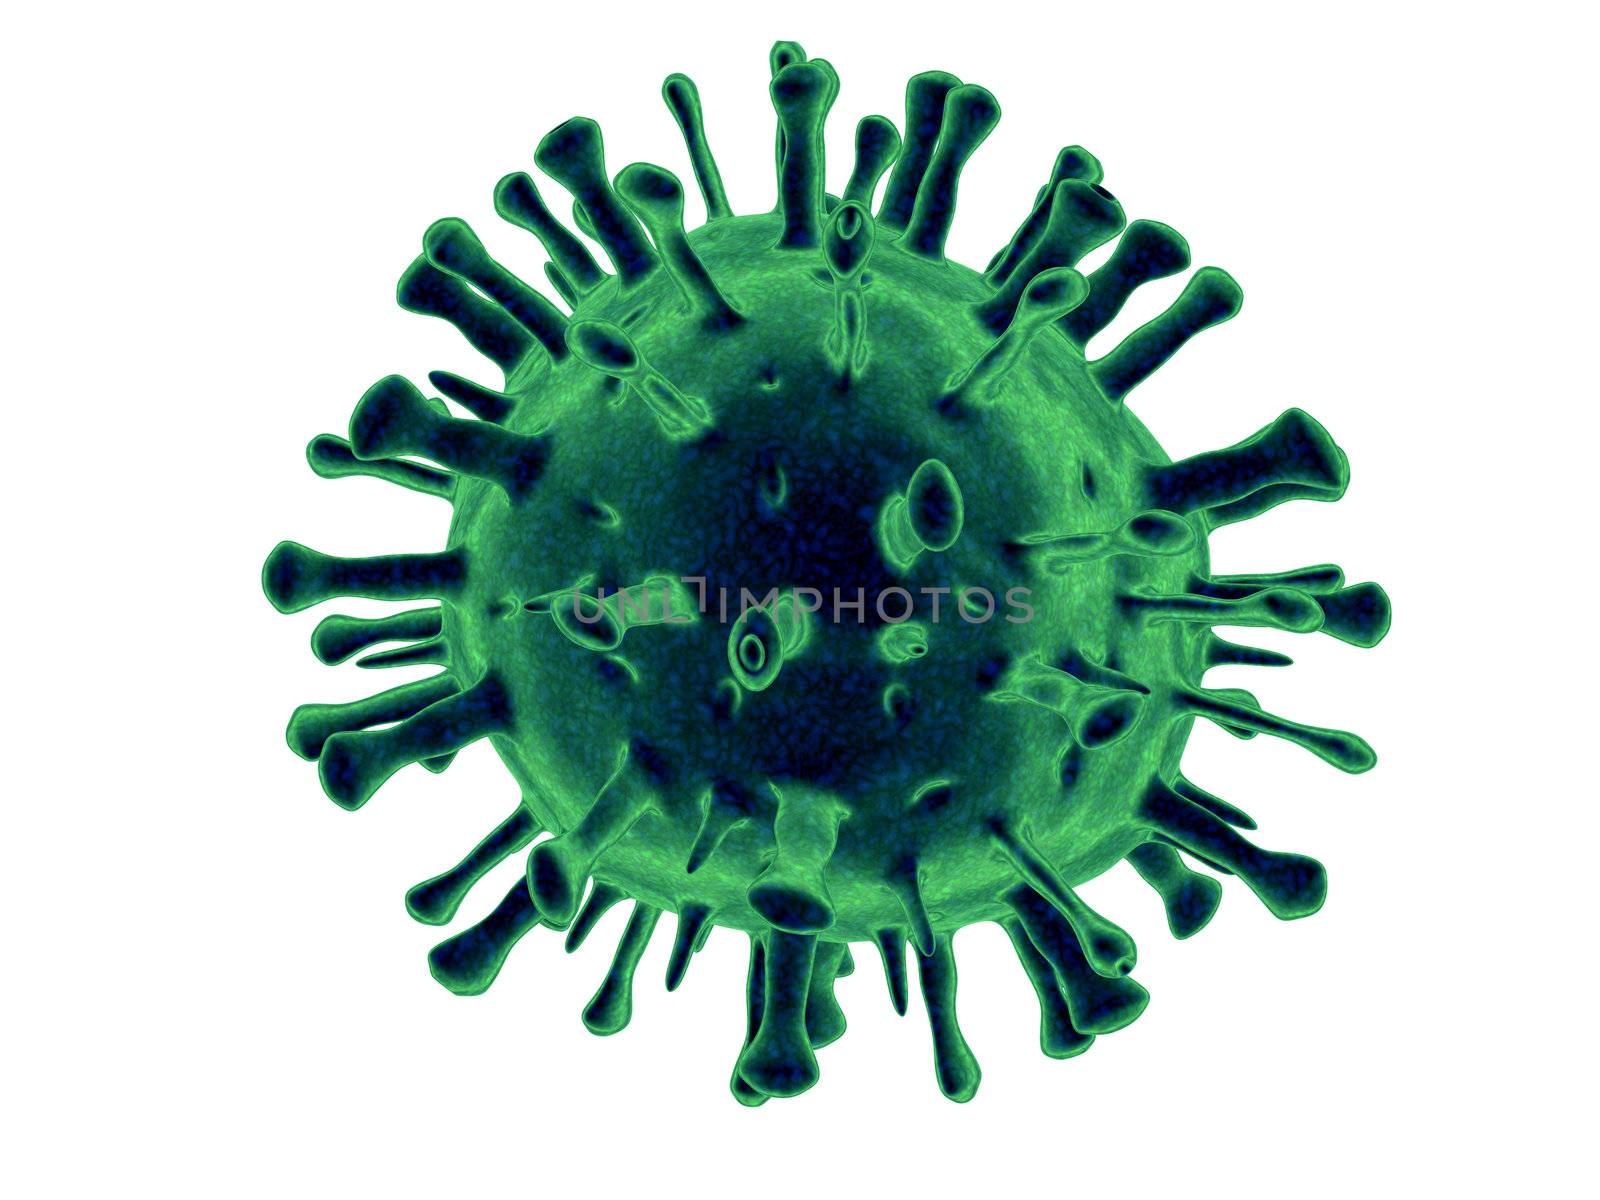 3d image of virus